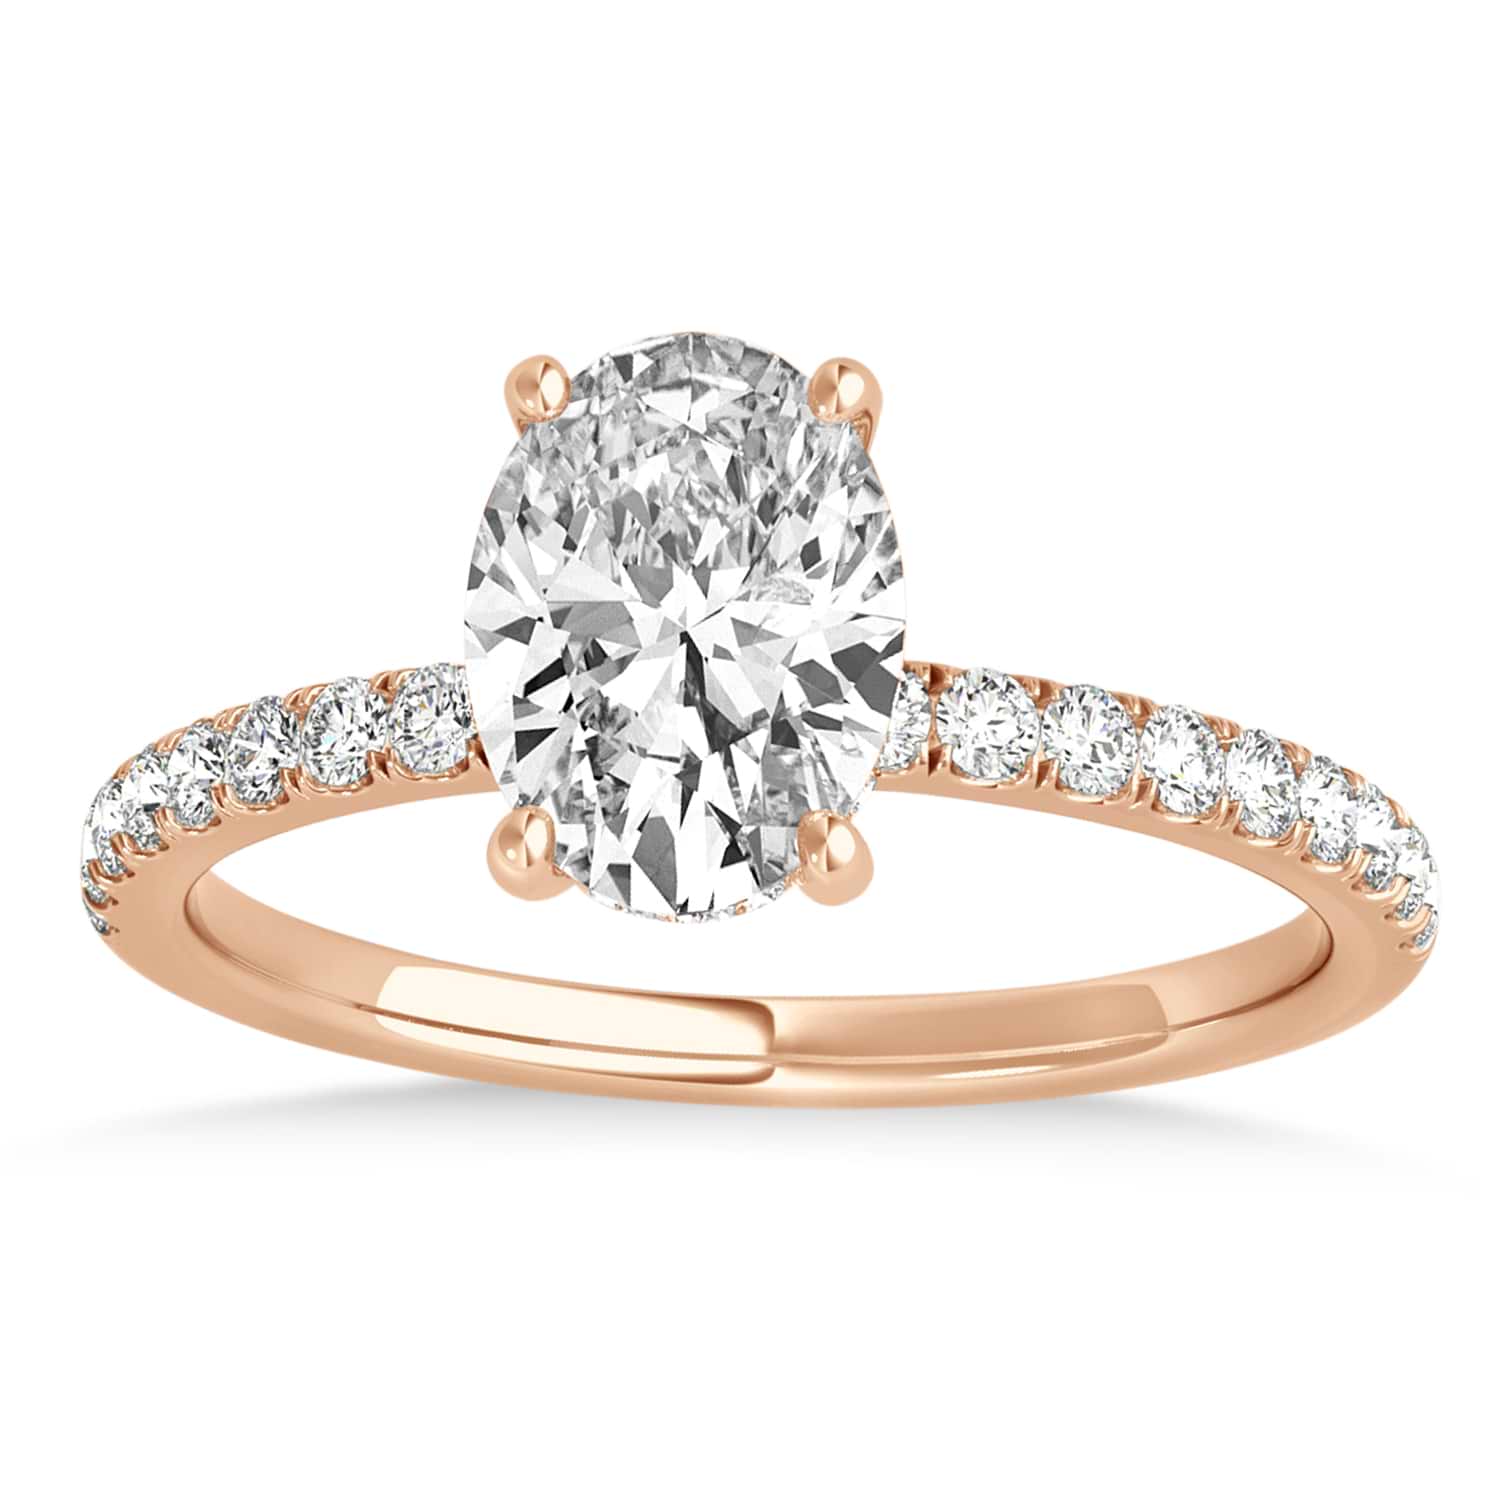 Oval Lab Grown Diamond Single Row Hidden Halo Engagement Ring 14k Rose Gold (1.50ct)